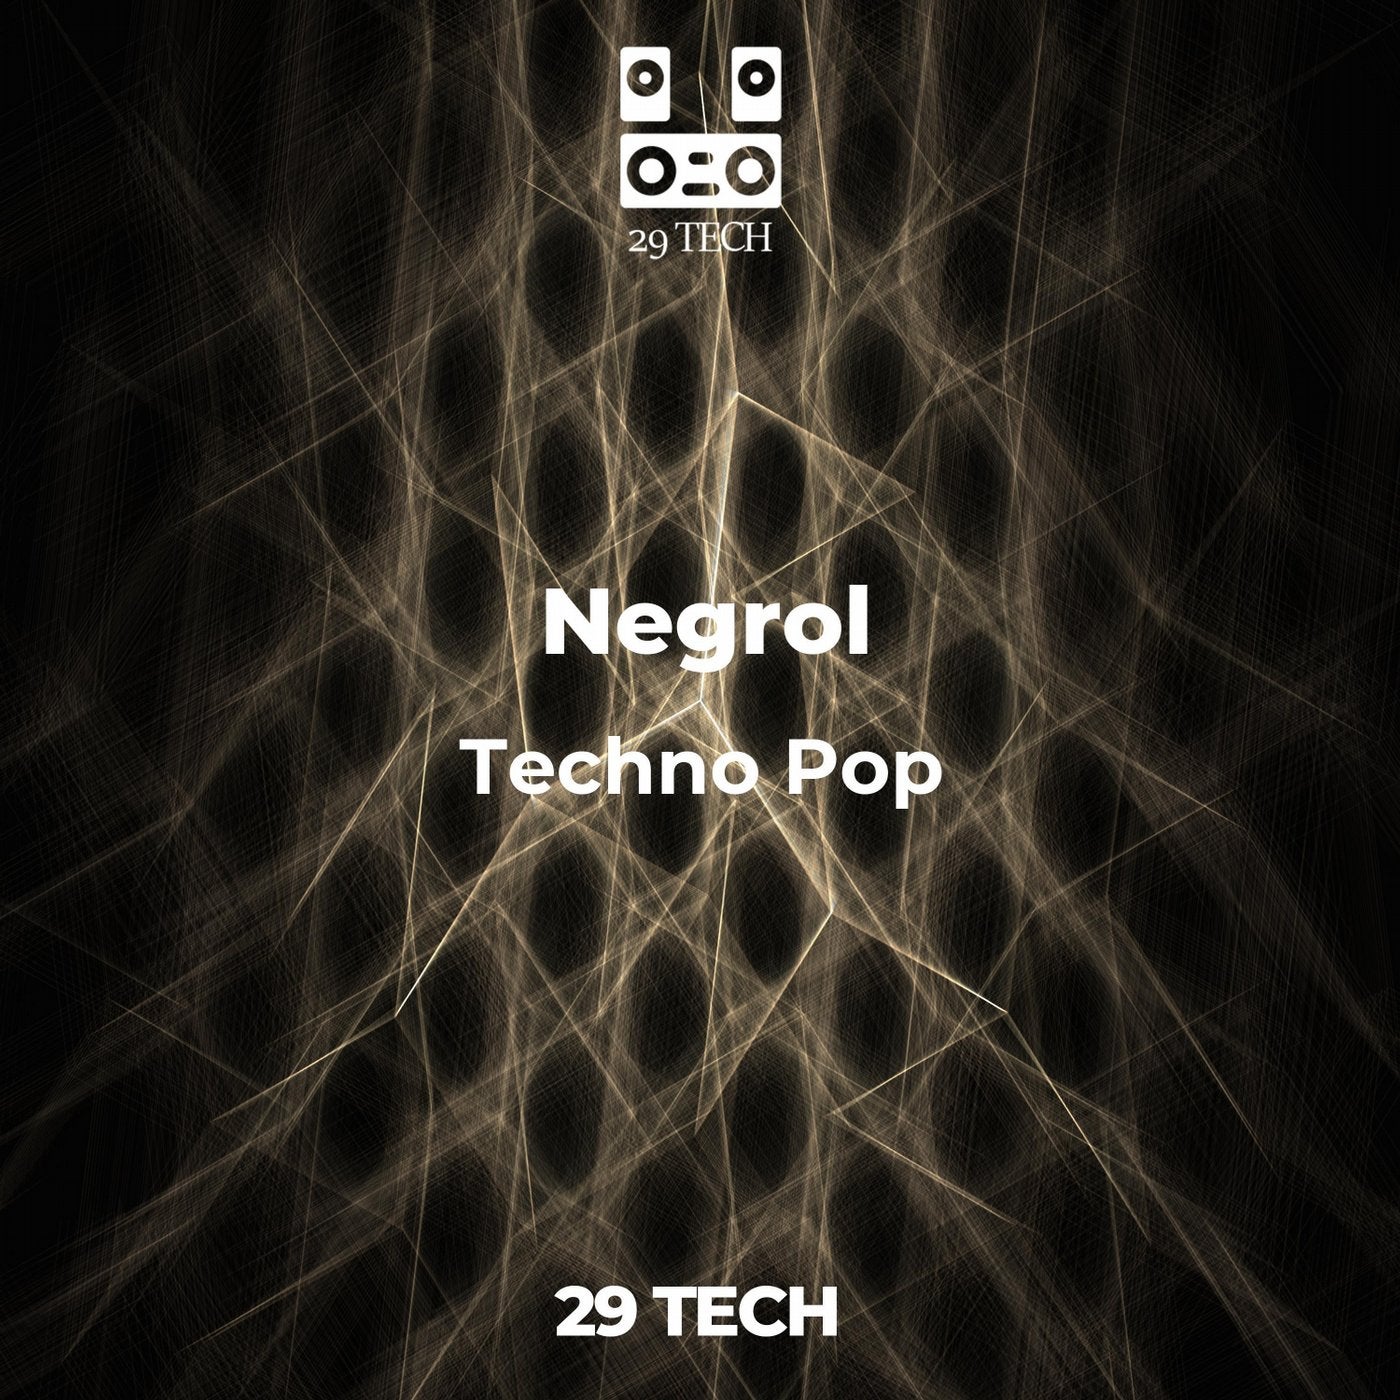 Techno Pop